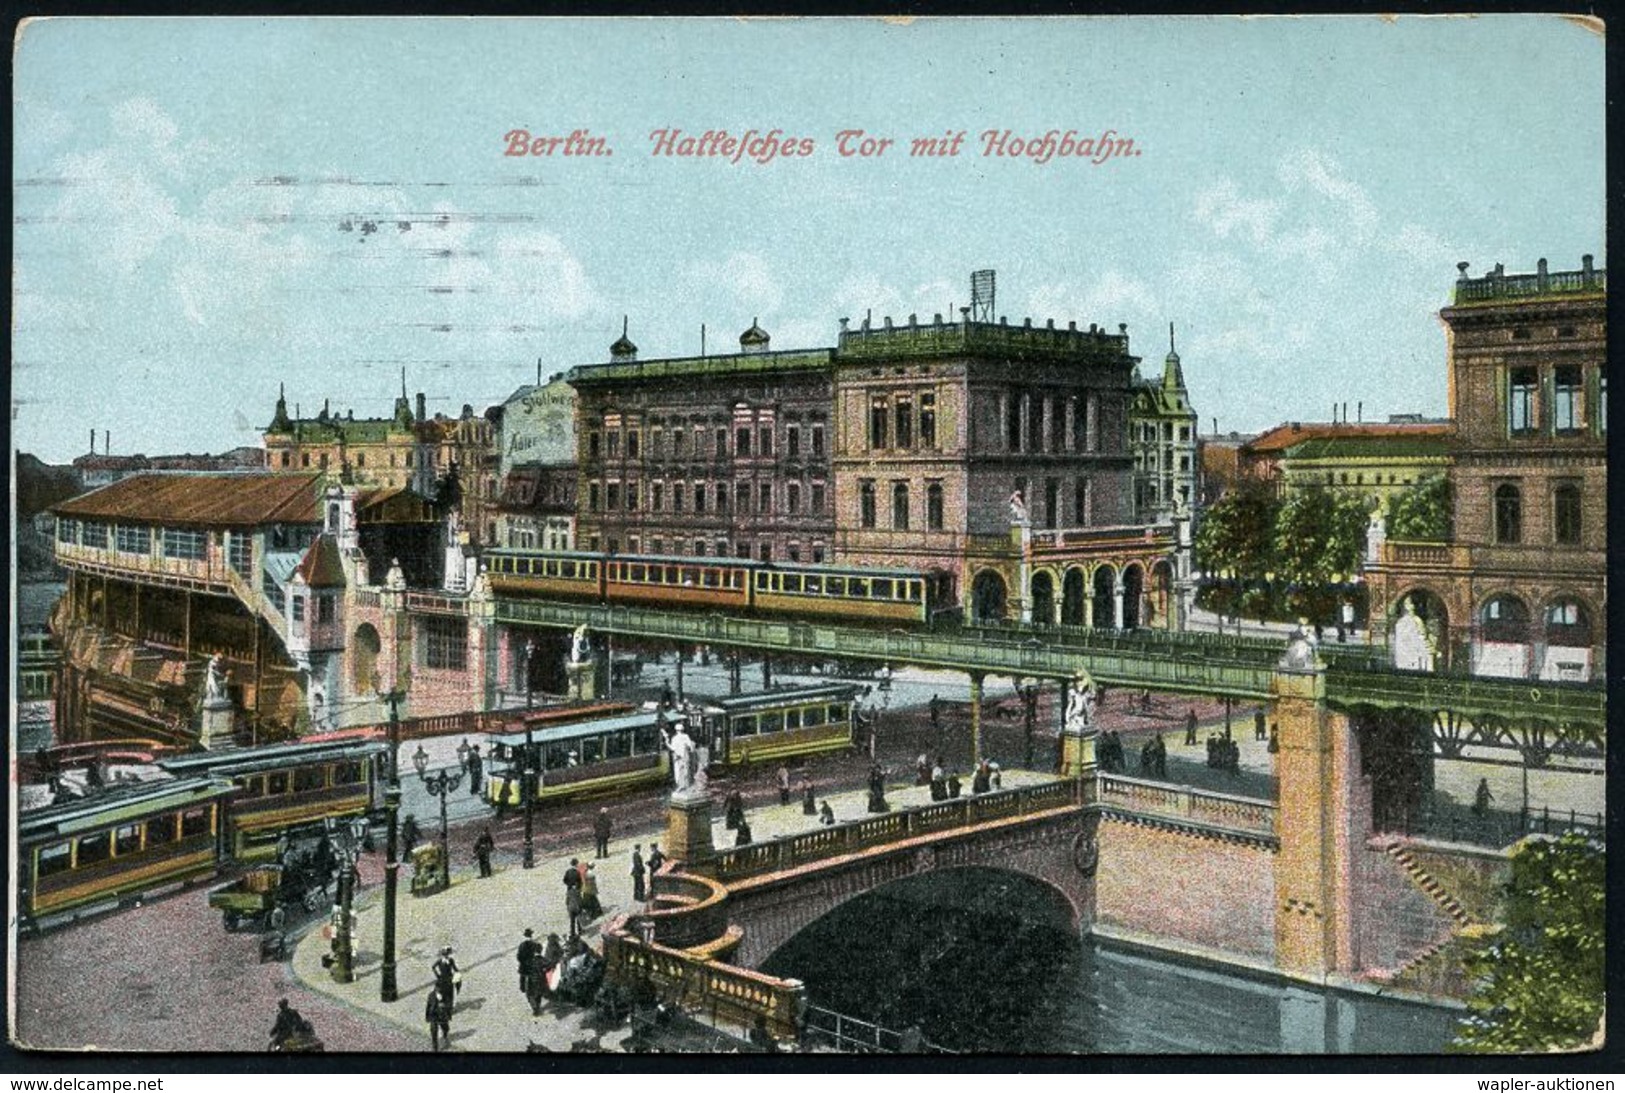 UNTERGRUNDBAHN /U-BAHN : Berlin-Kreuzberg 1905/15 U-Bahnhof Hallesches Tor, 10 verschiedene Color-Foto-Ak. , meist gebr.